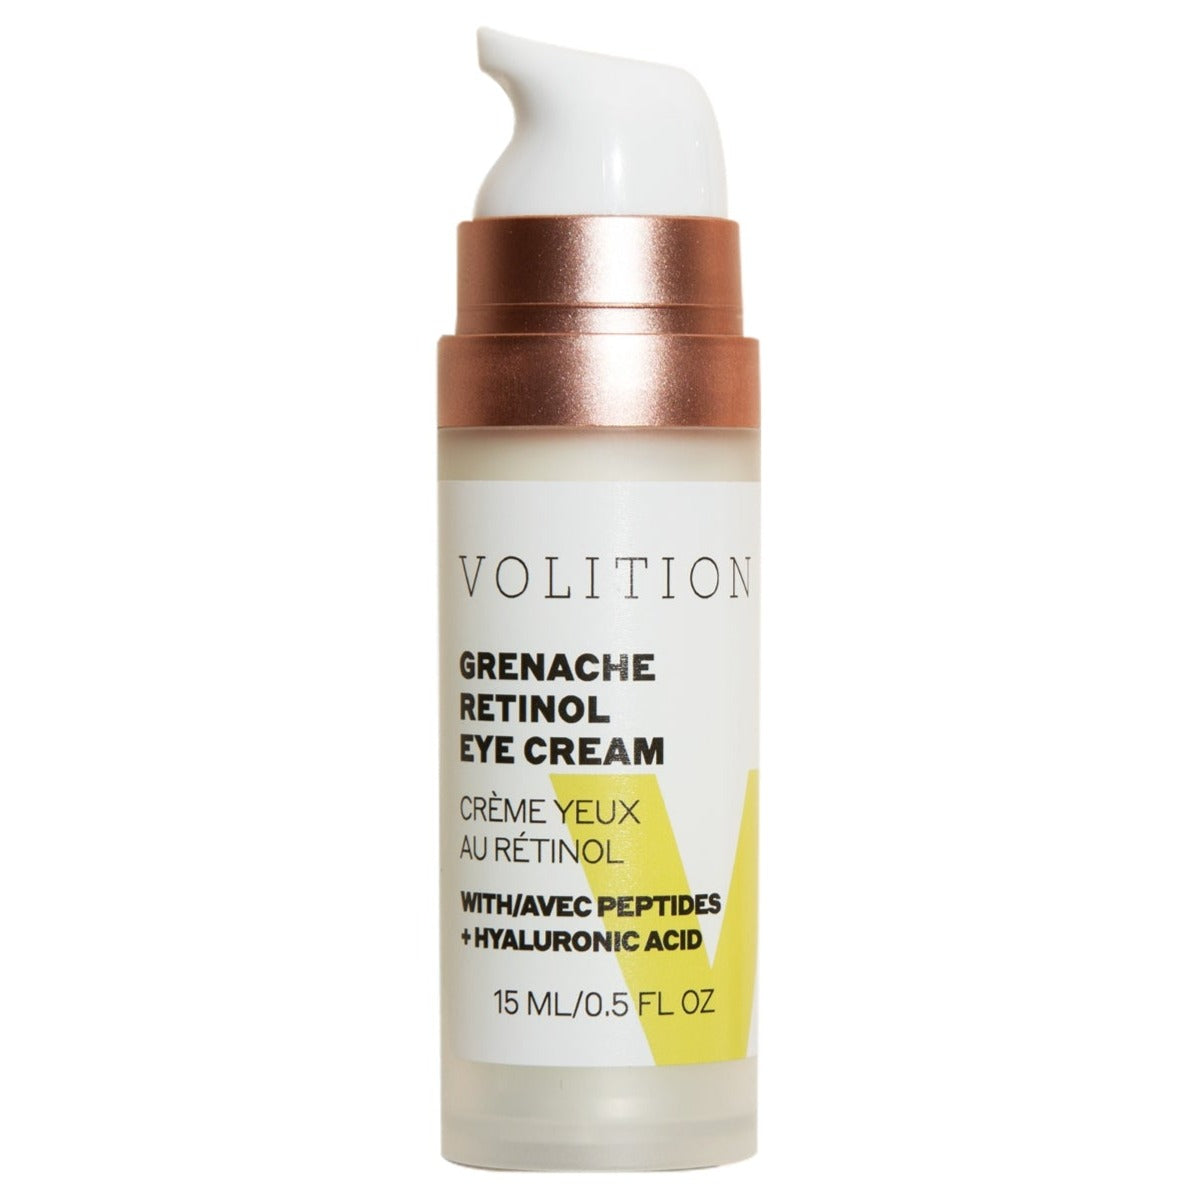 Volition Beauty Grenache Retinol Eye Cream, 15 ml / 0.5 fl oz